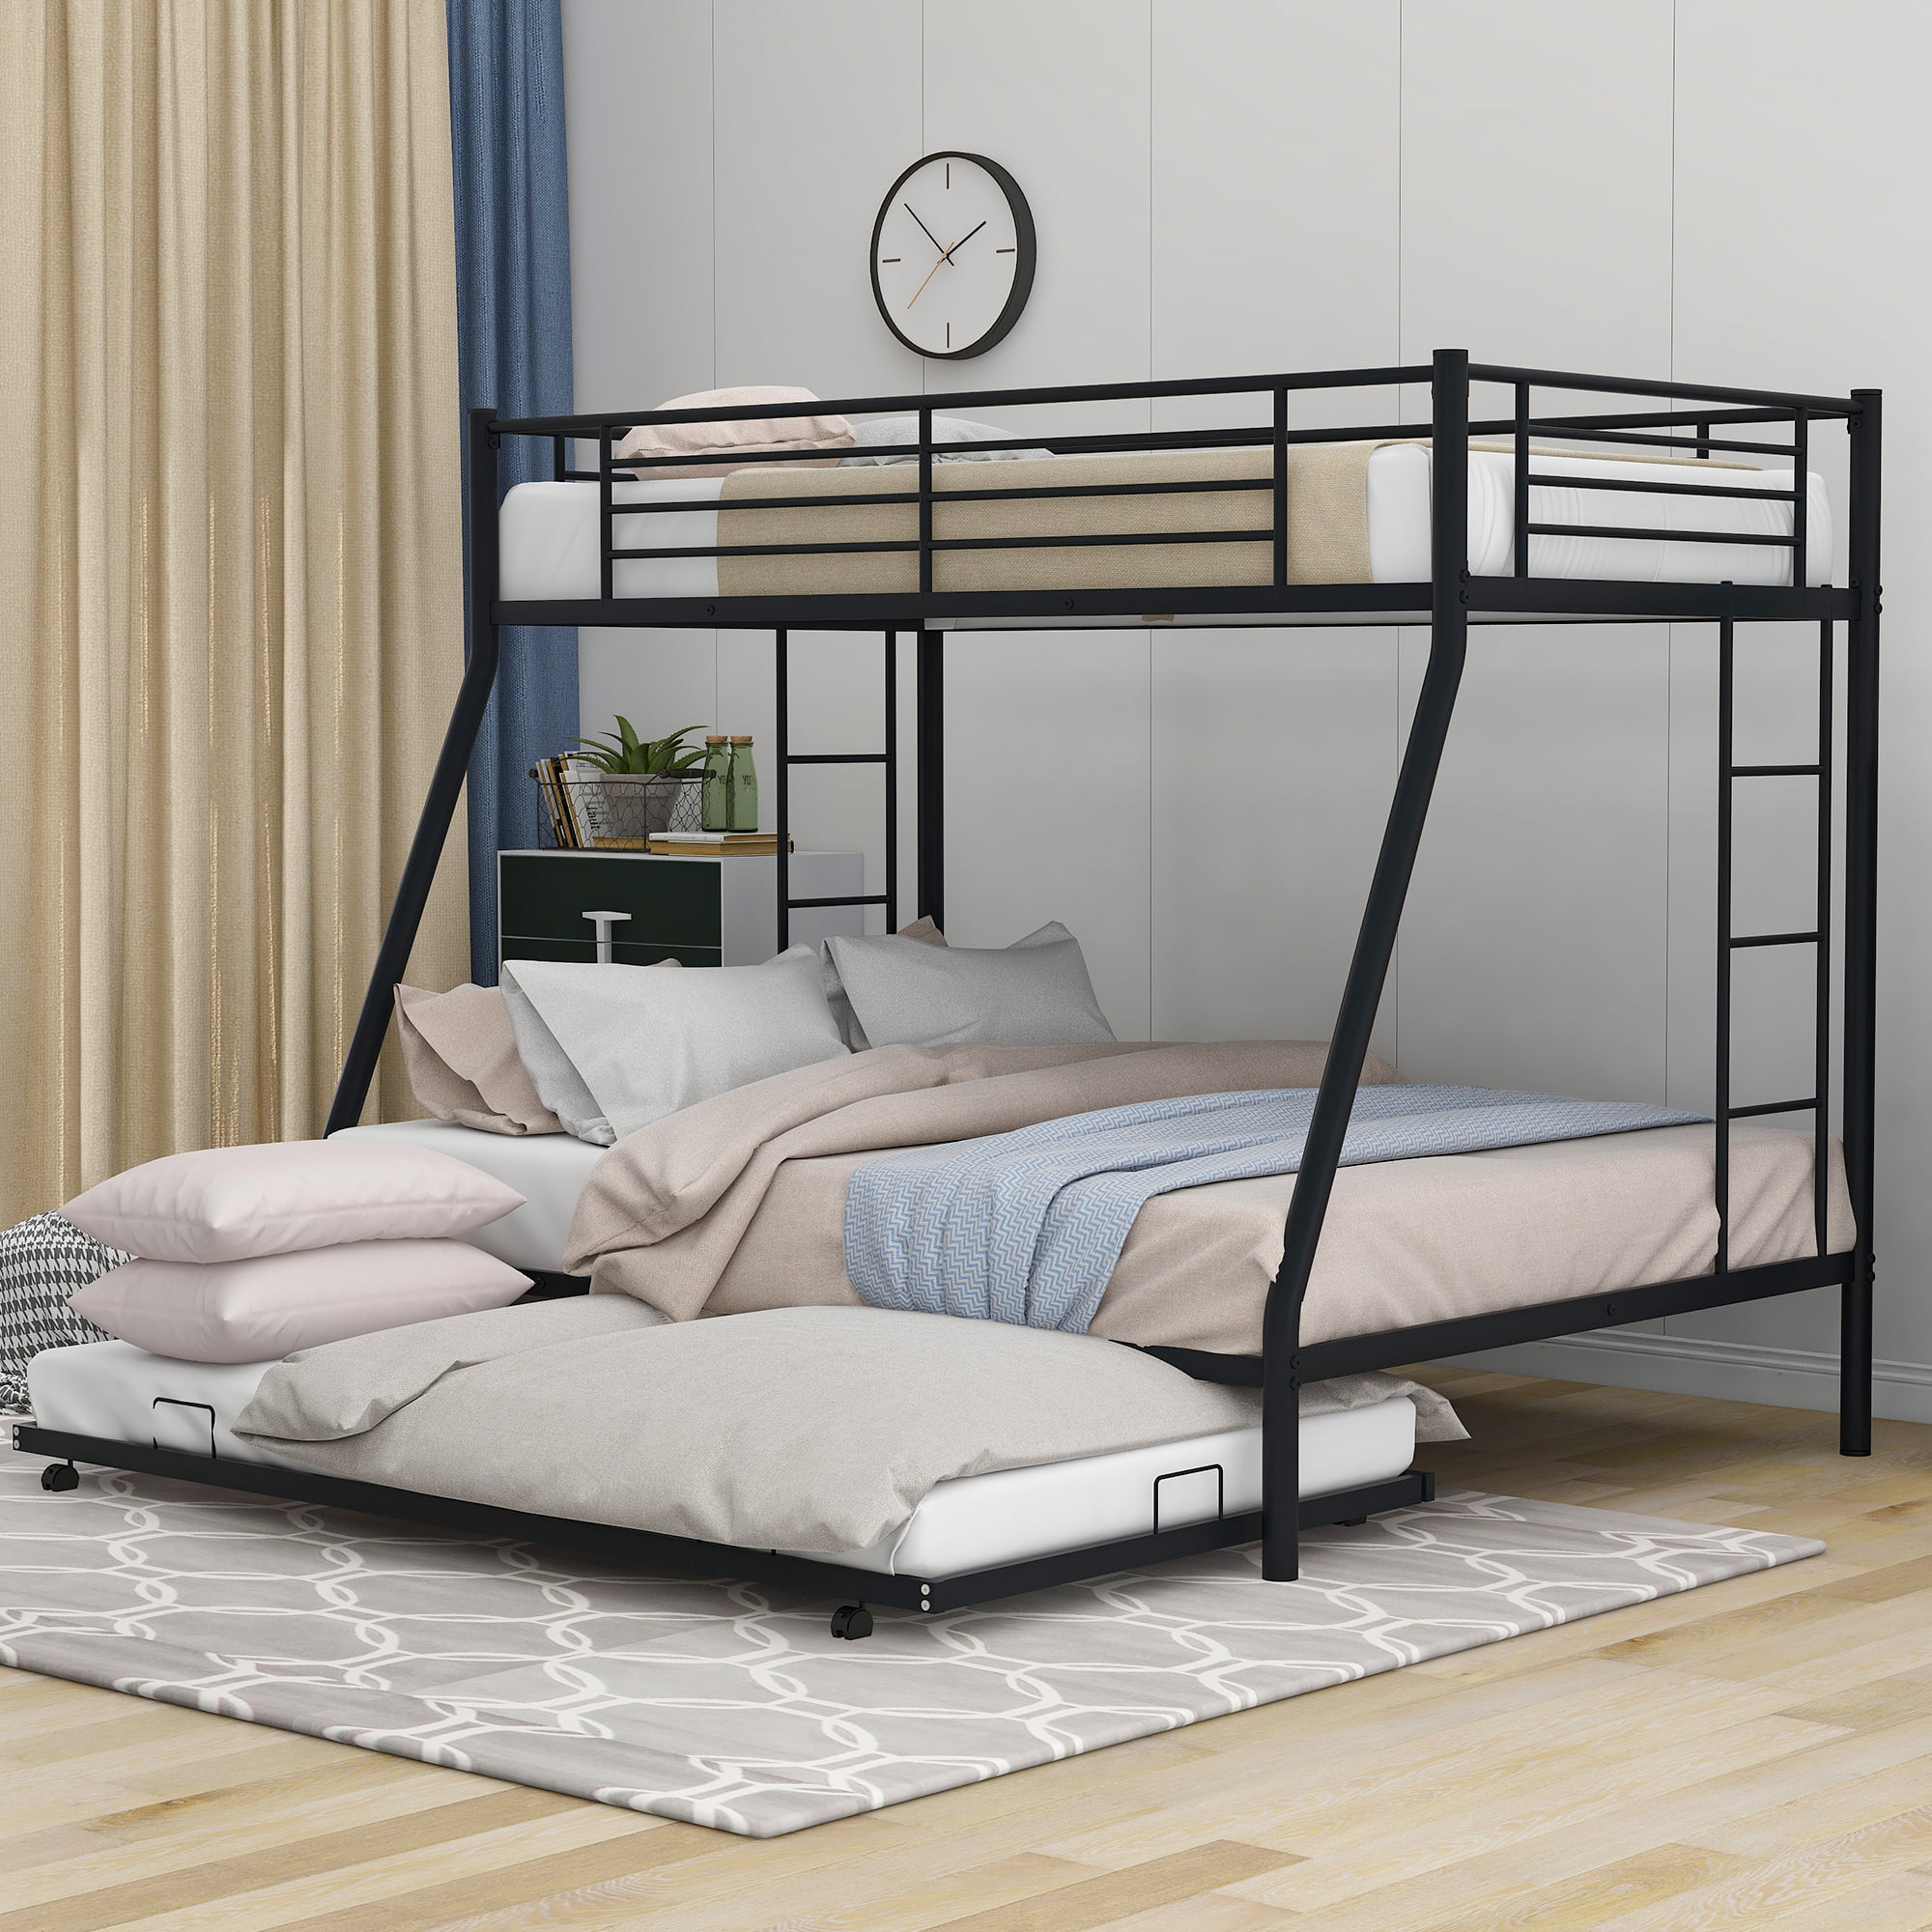 Euroco Steel Twin Over Full Bunk Bed, Metal Twin Over Full Bunk Bed With Trundle And Storage